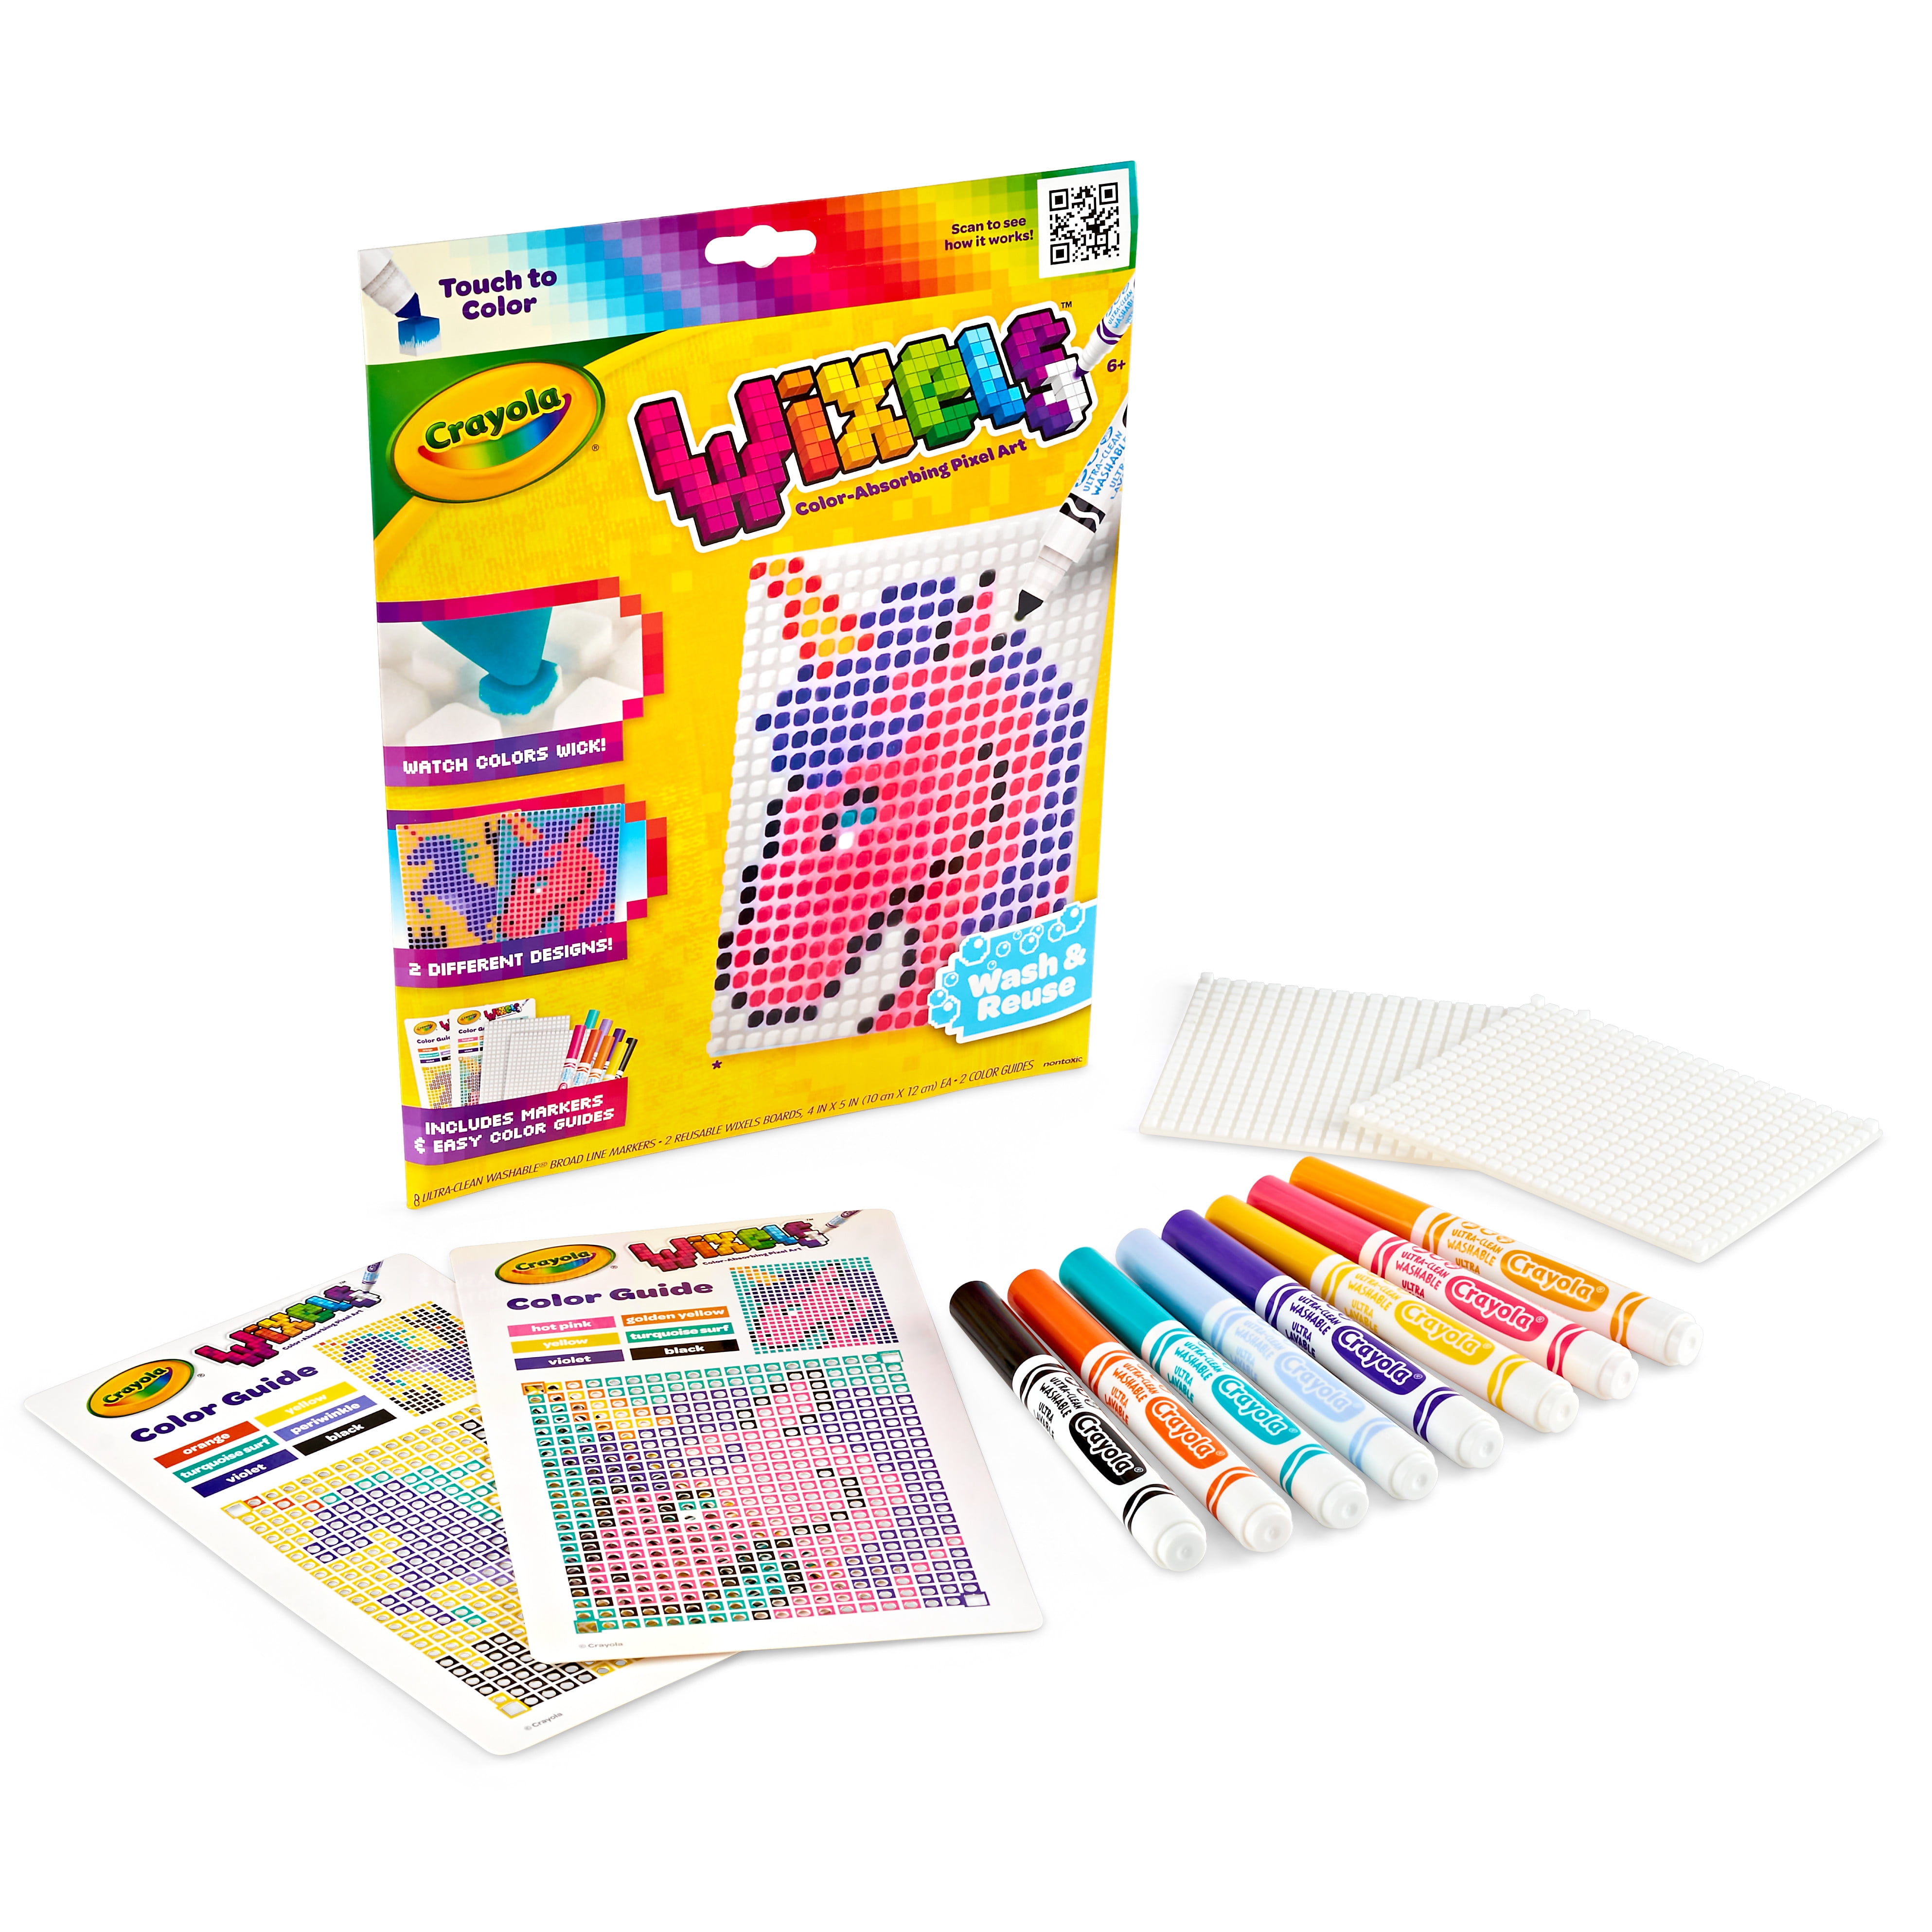 Crayola Wixels Unicorn Activity Kit, Pixel Art Coloring Set, Gift for Kids